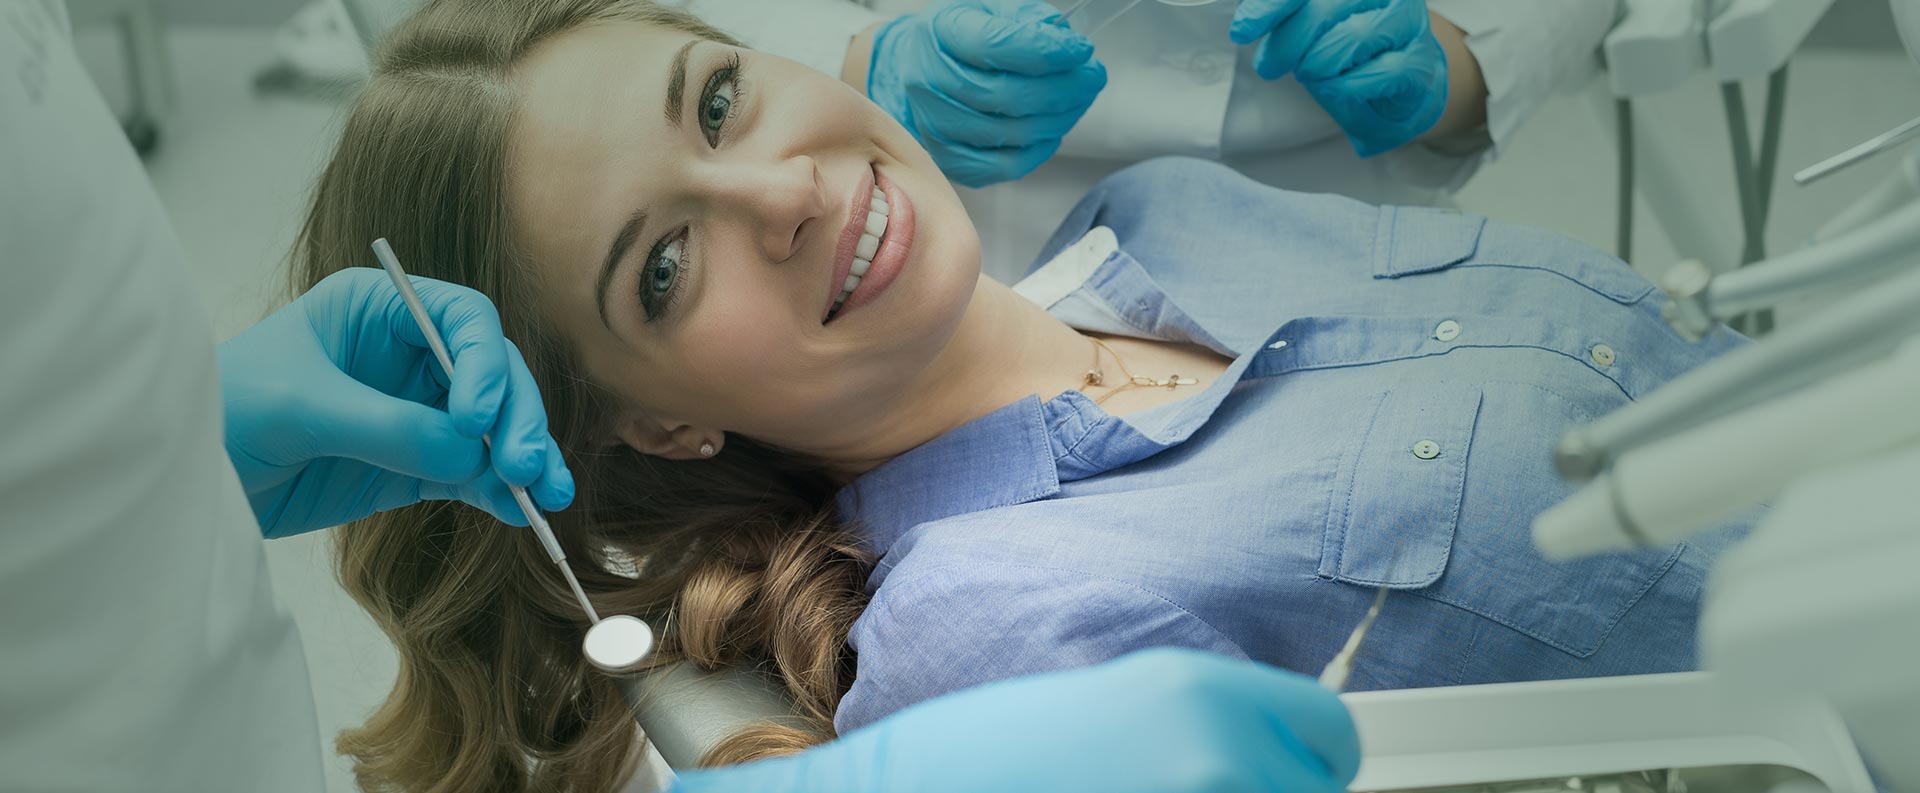 Woman preparing for dental surgery